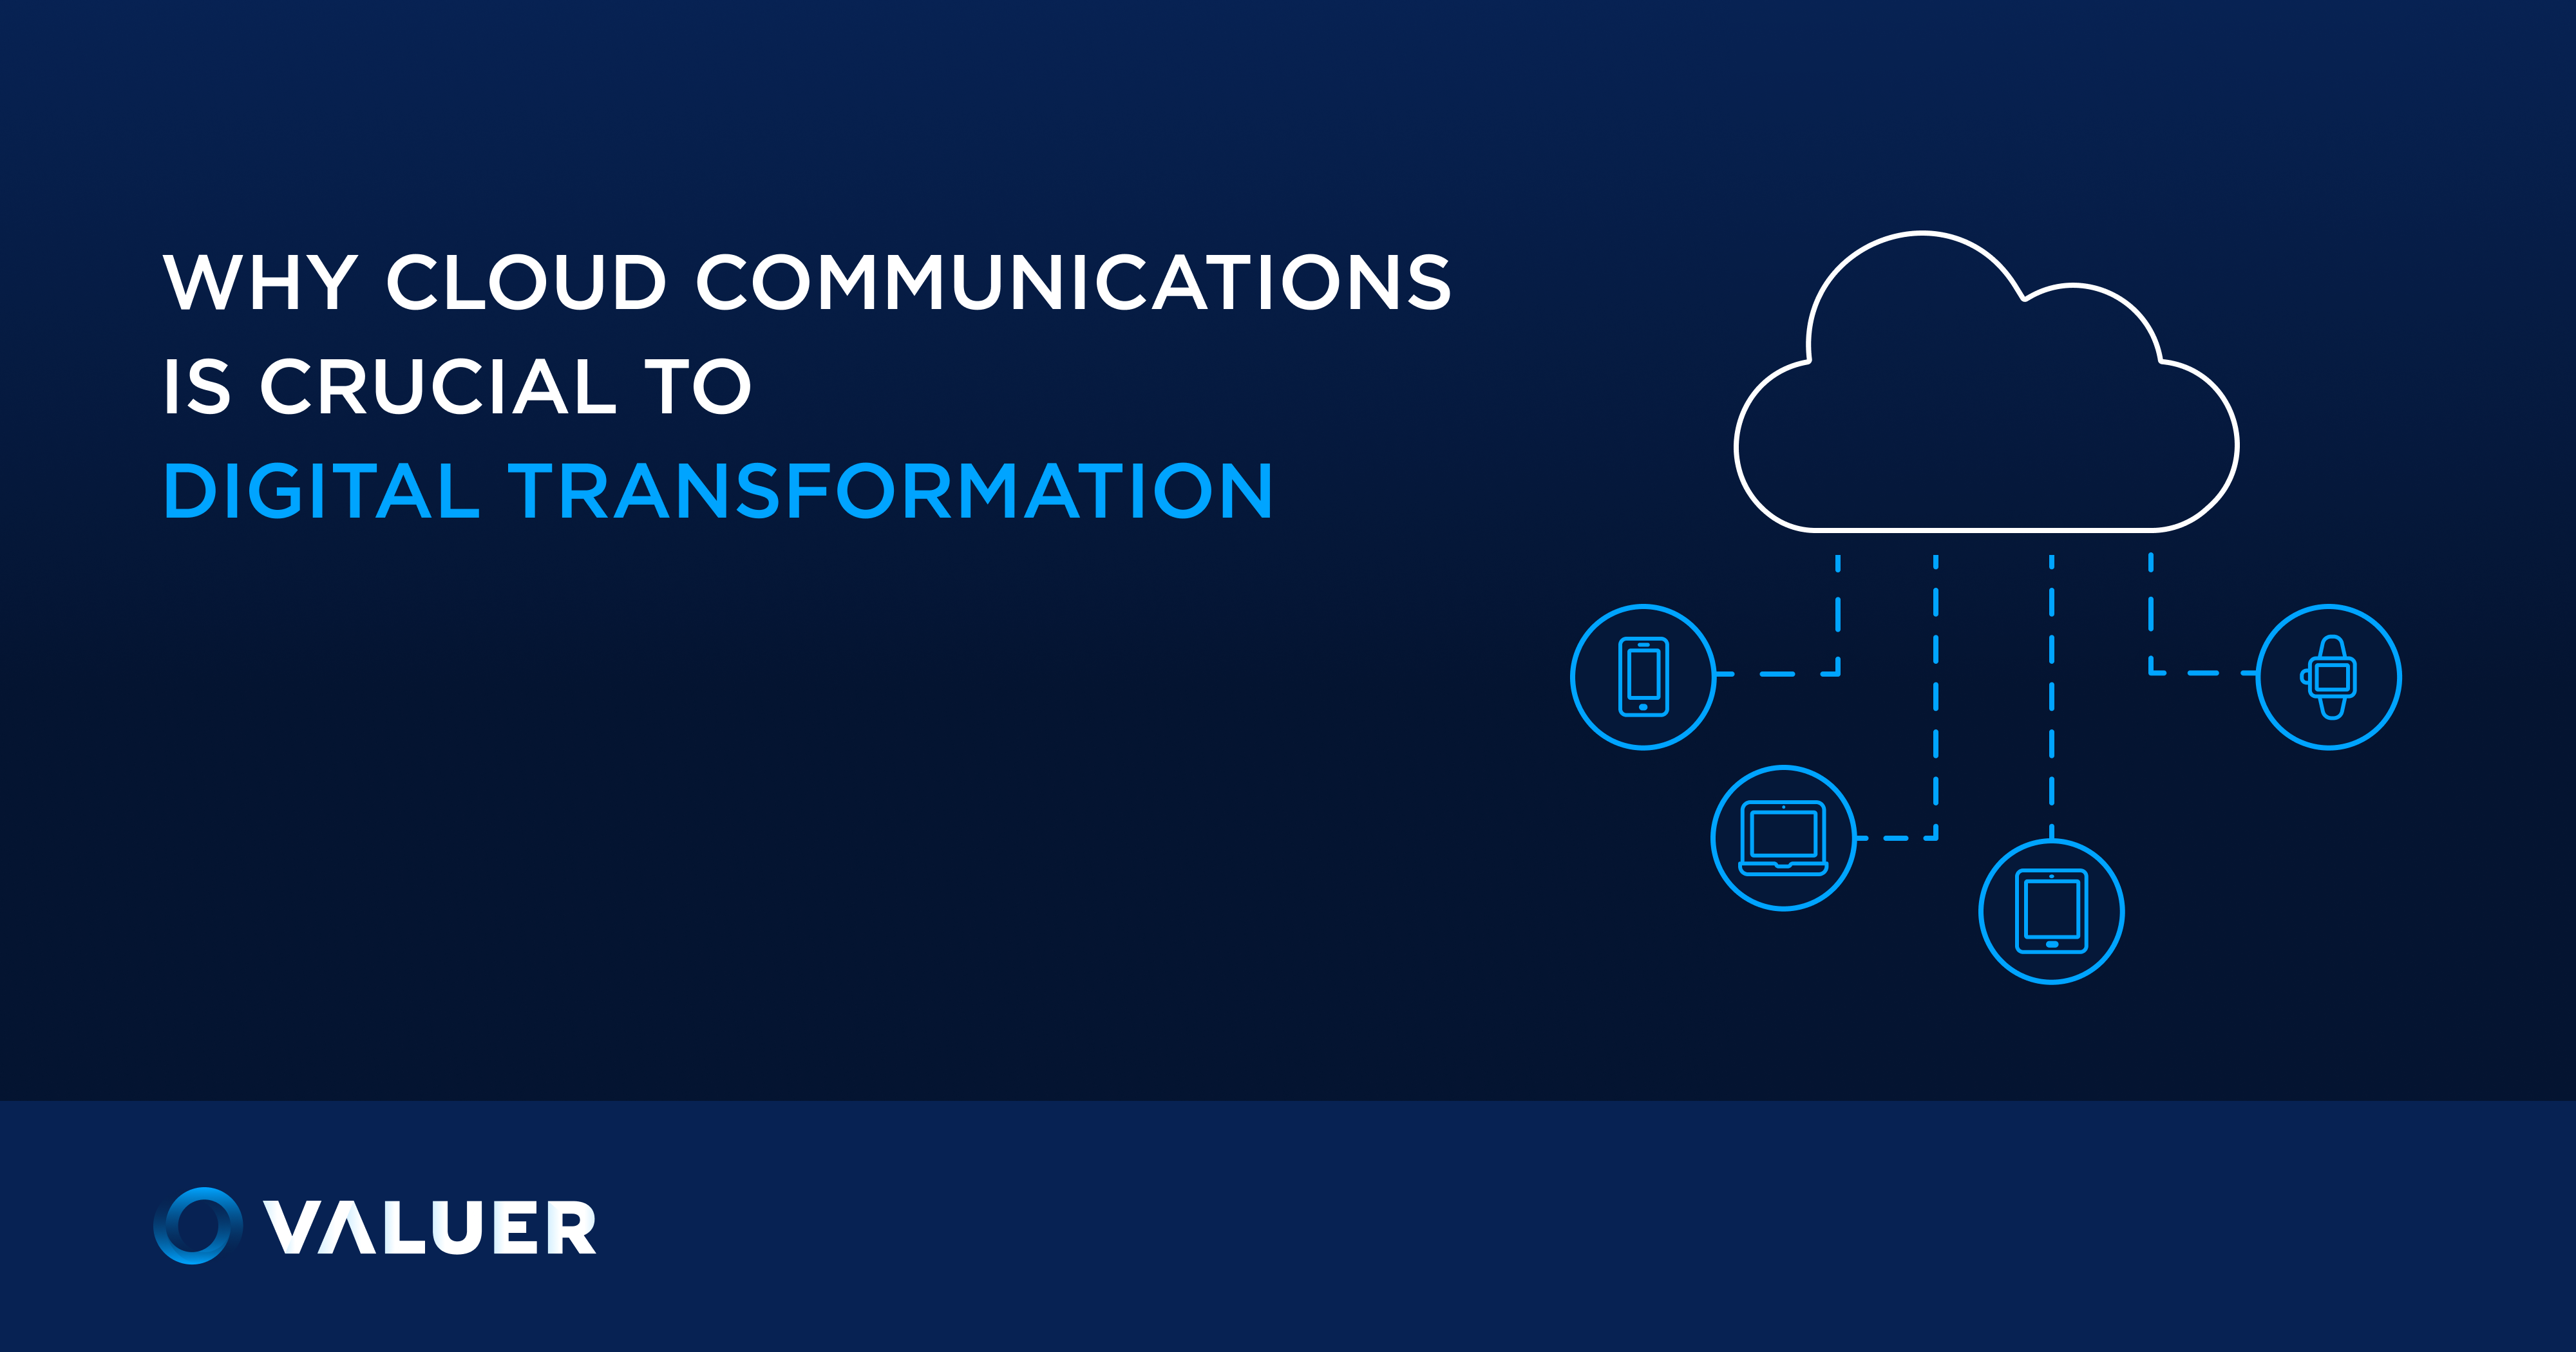 Cloud communication: The Backbone of the Digital Transformation